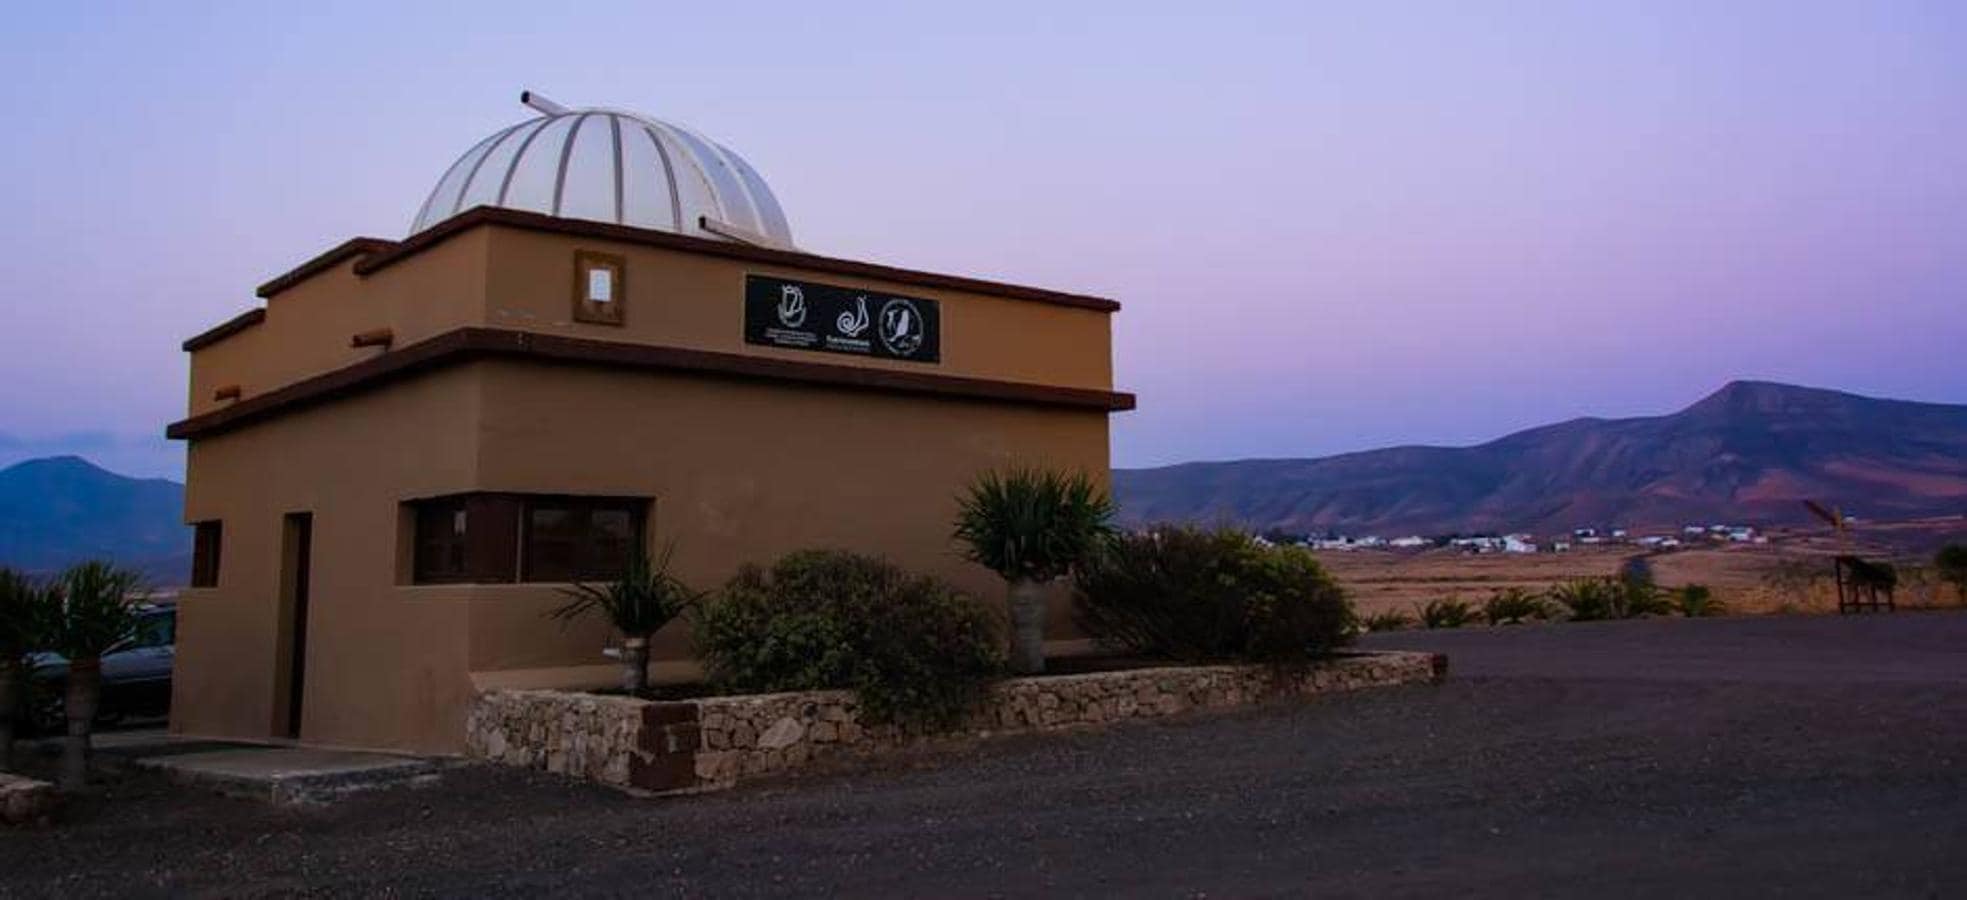 Observatorio de Tefia Fuerteventura 